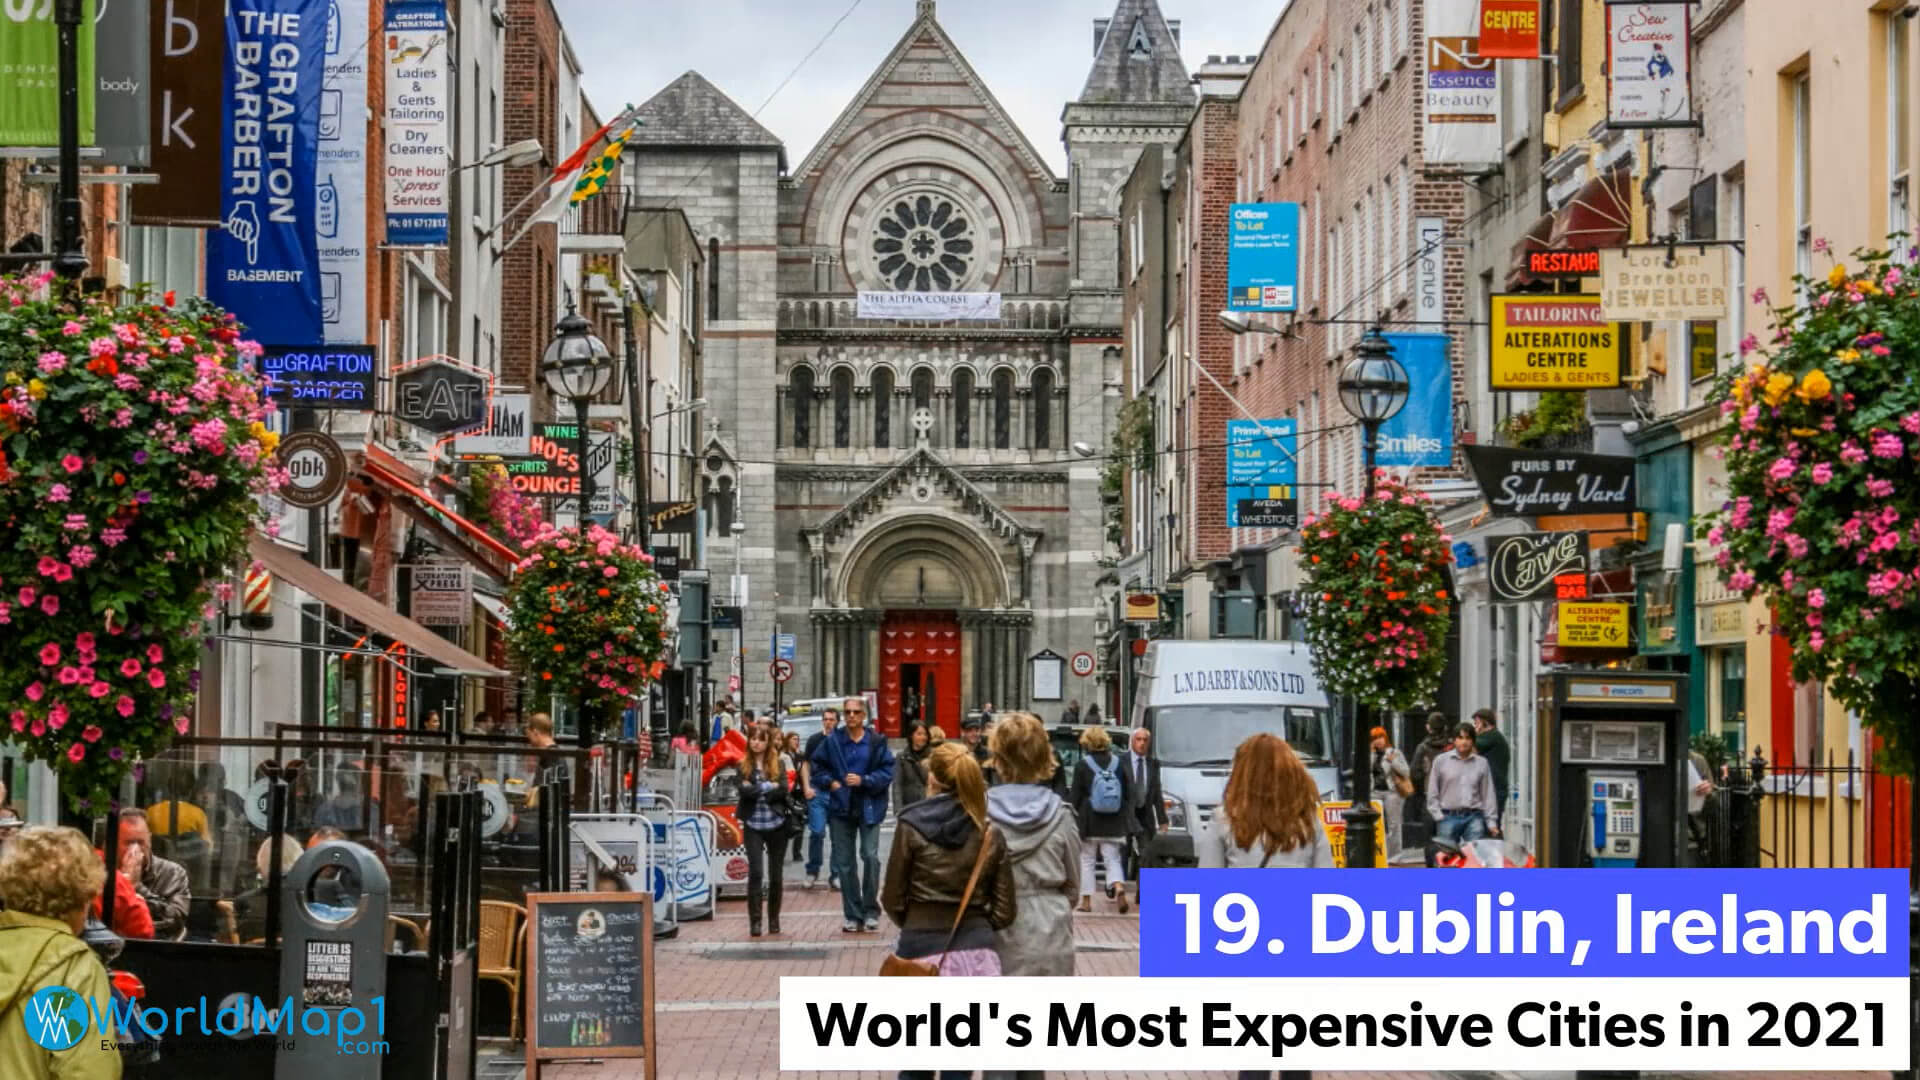 World's Most Expensive Cities - Dublin, Ireland